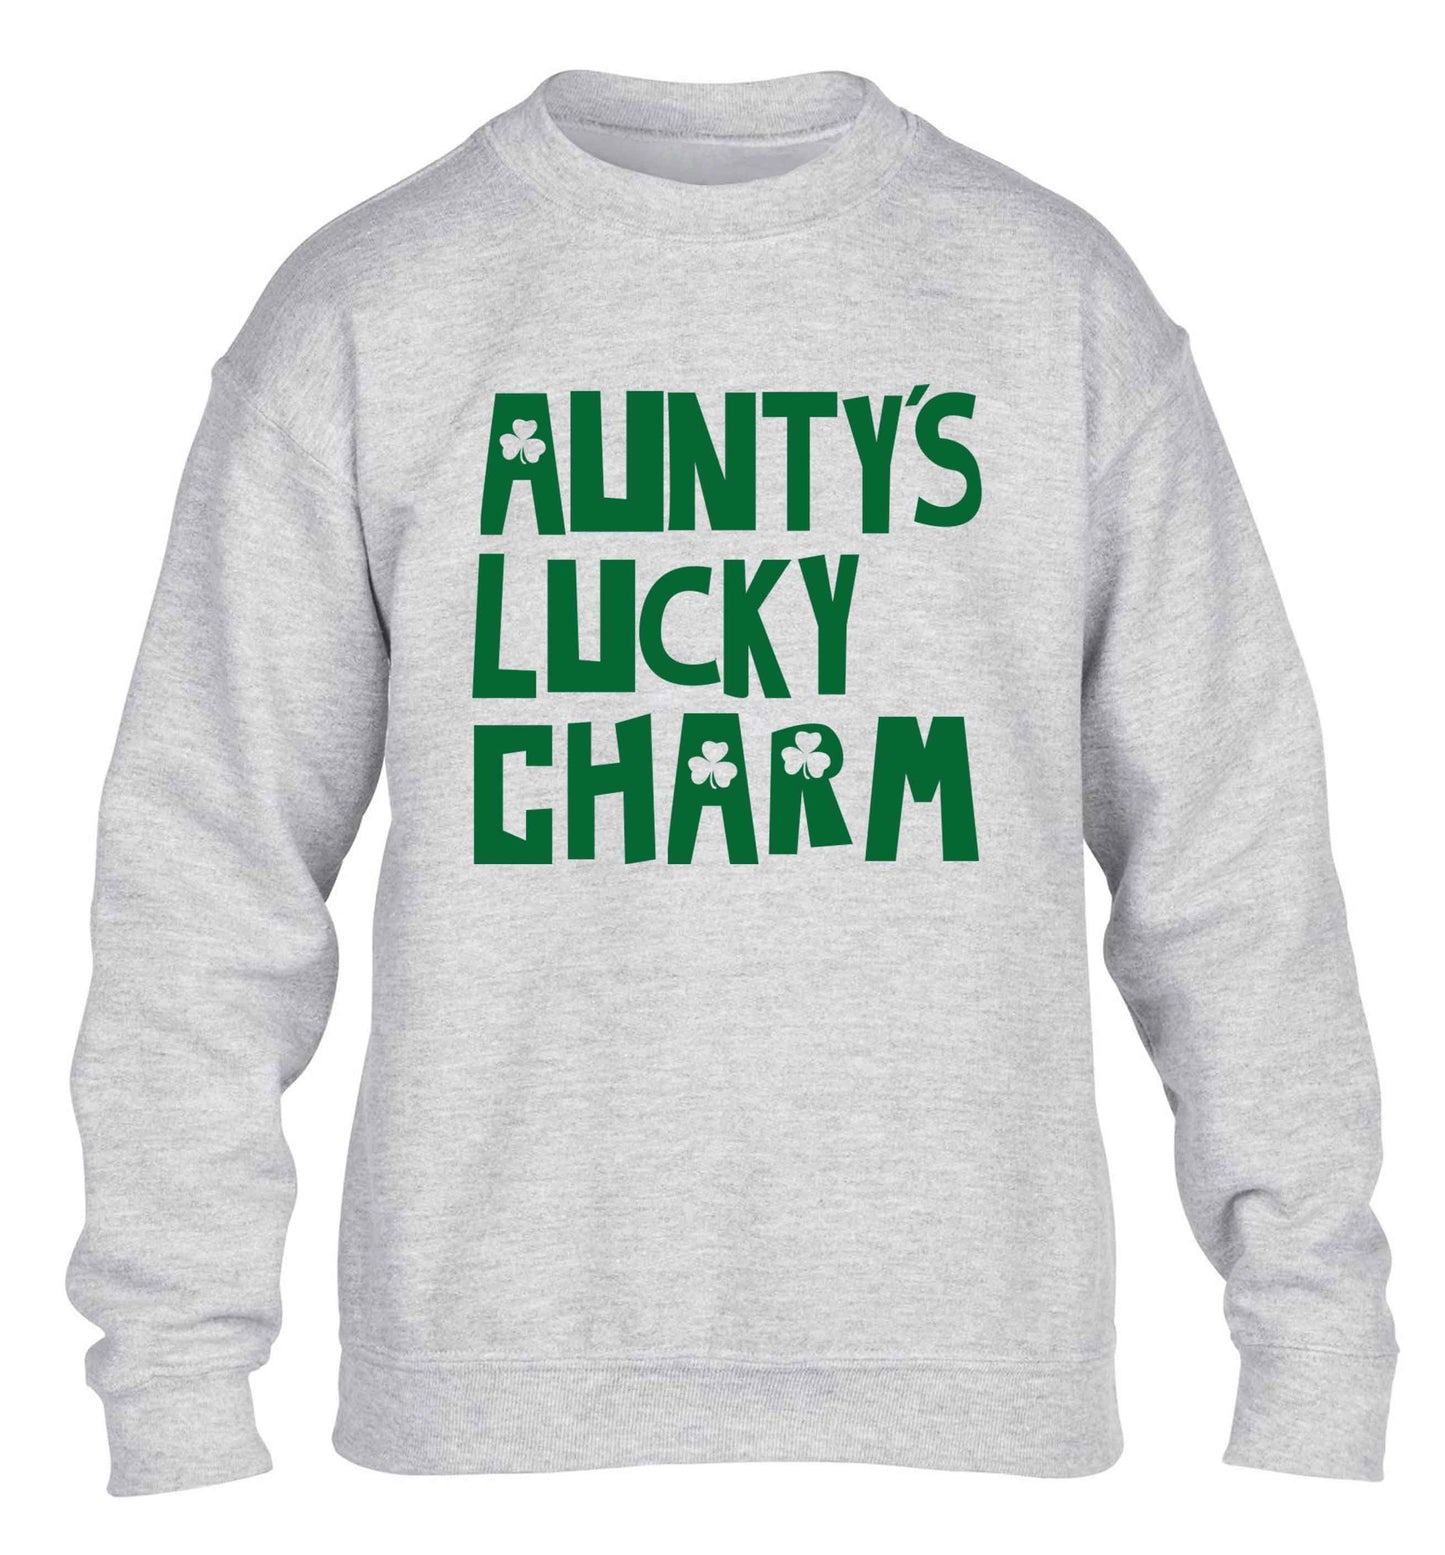 Aunty's lucky charm children's grey sweater 12-13 Years